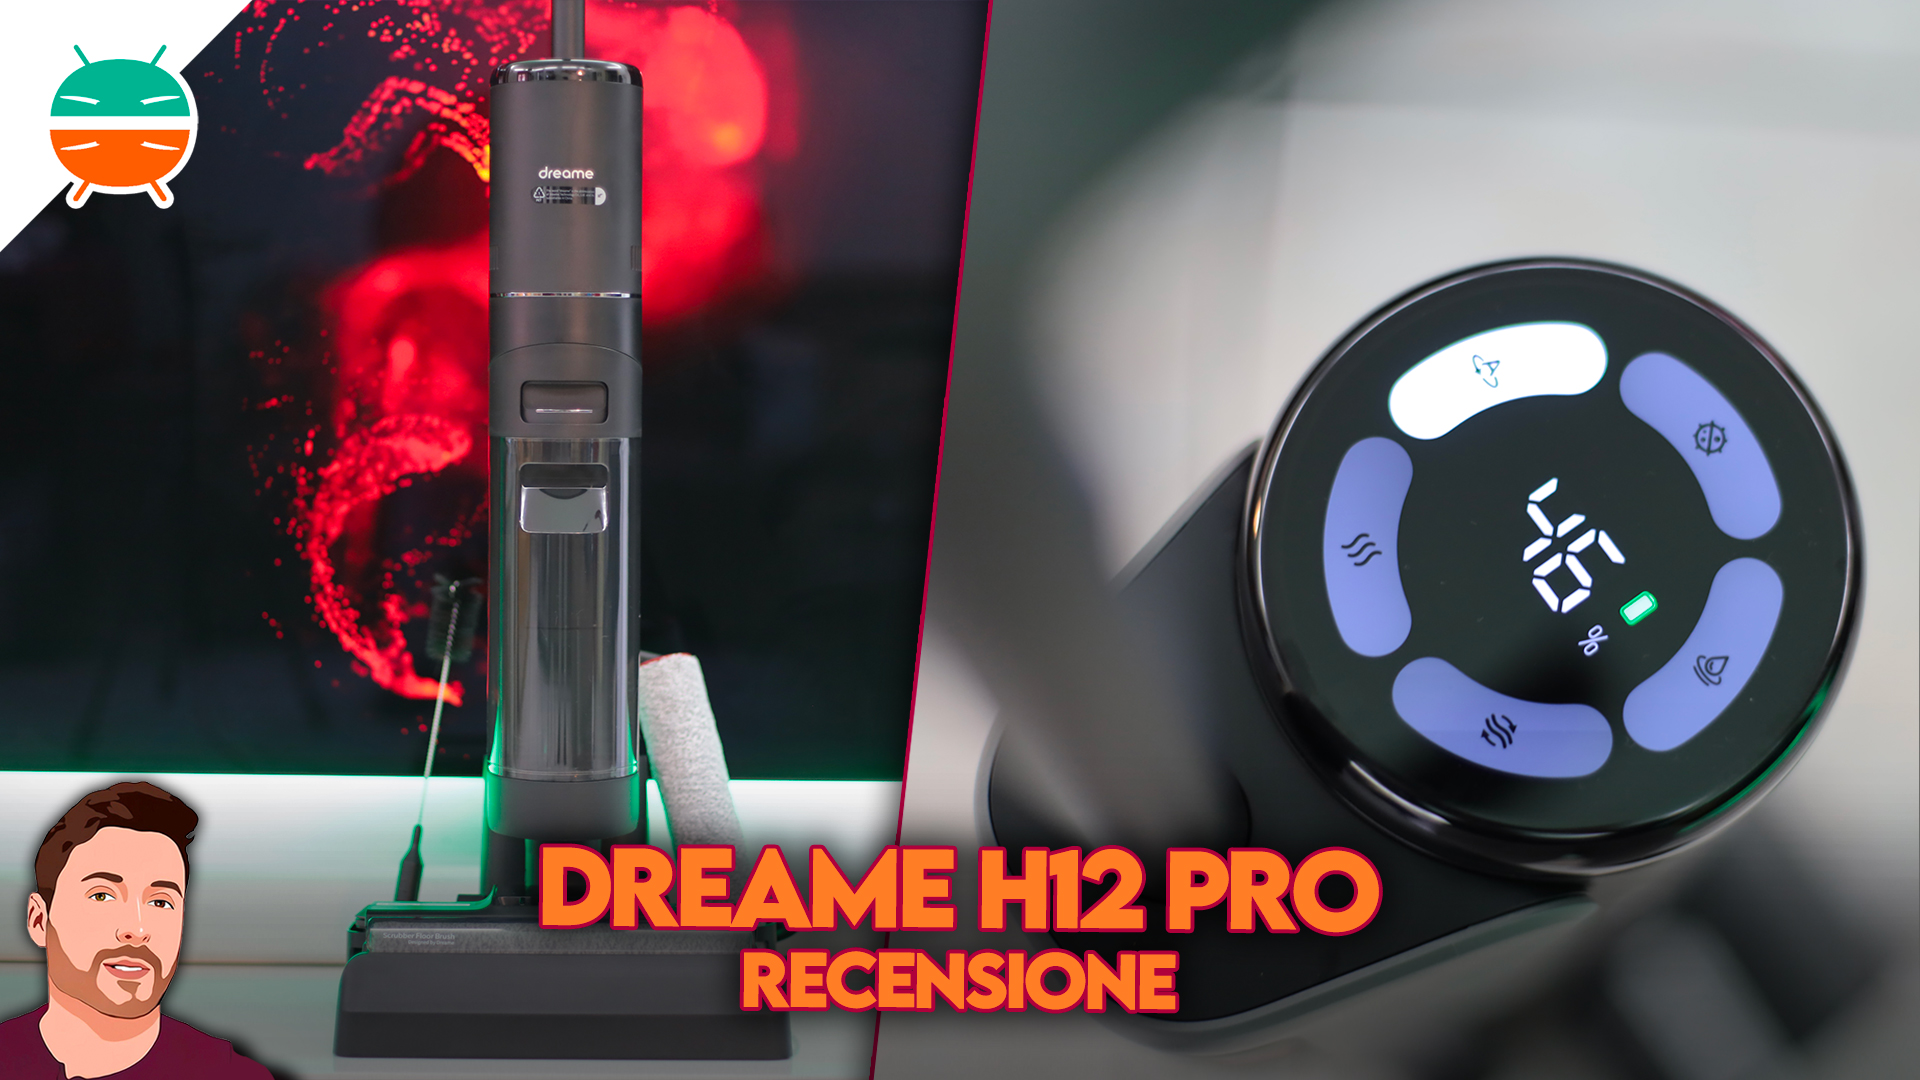 Dreame H12 Pro – Dreame Global